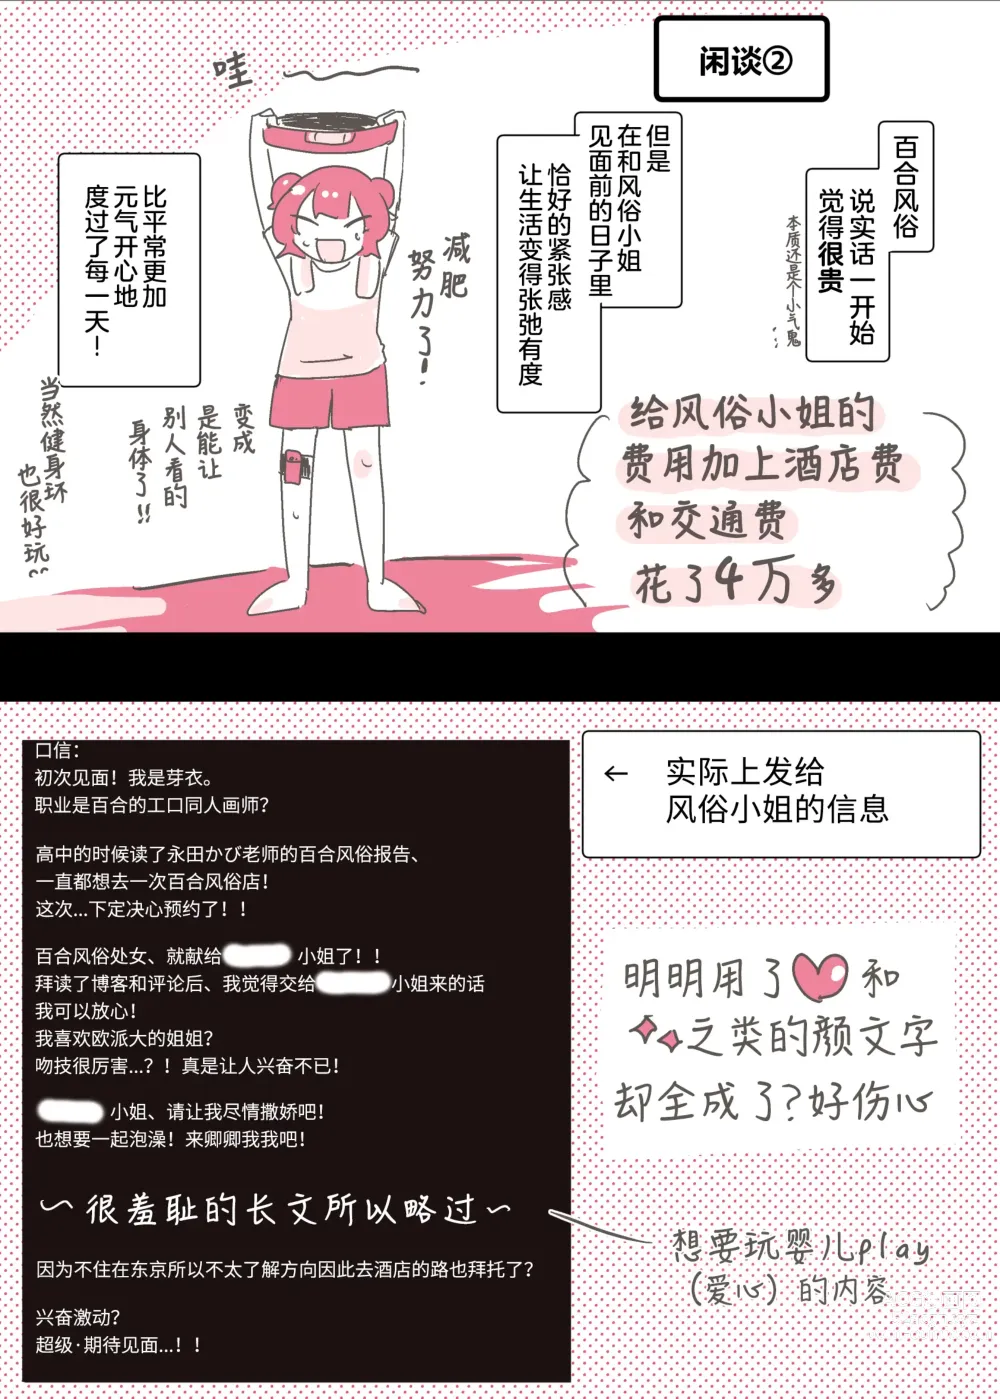 Page 9 of doujinshi 变态百合前辈售出1000份纪念百合风俗之行报告